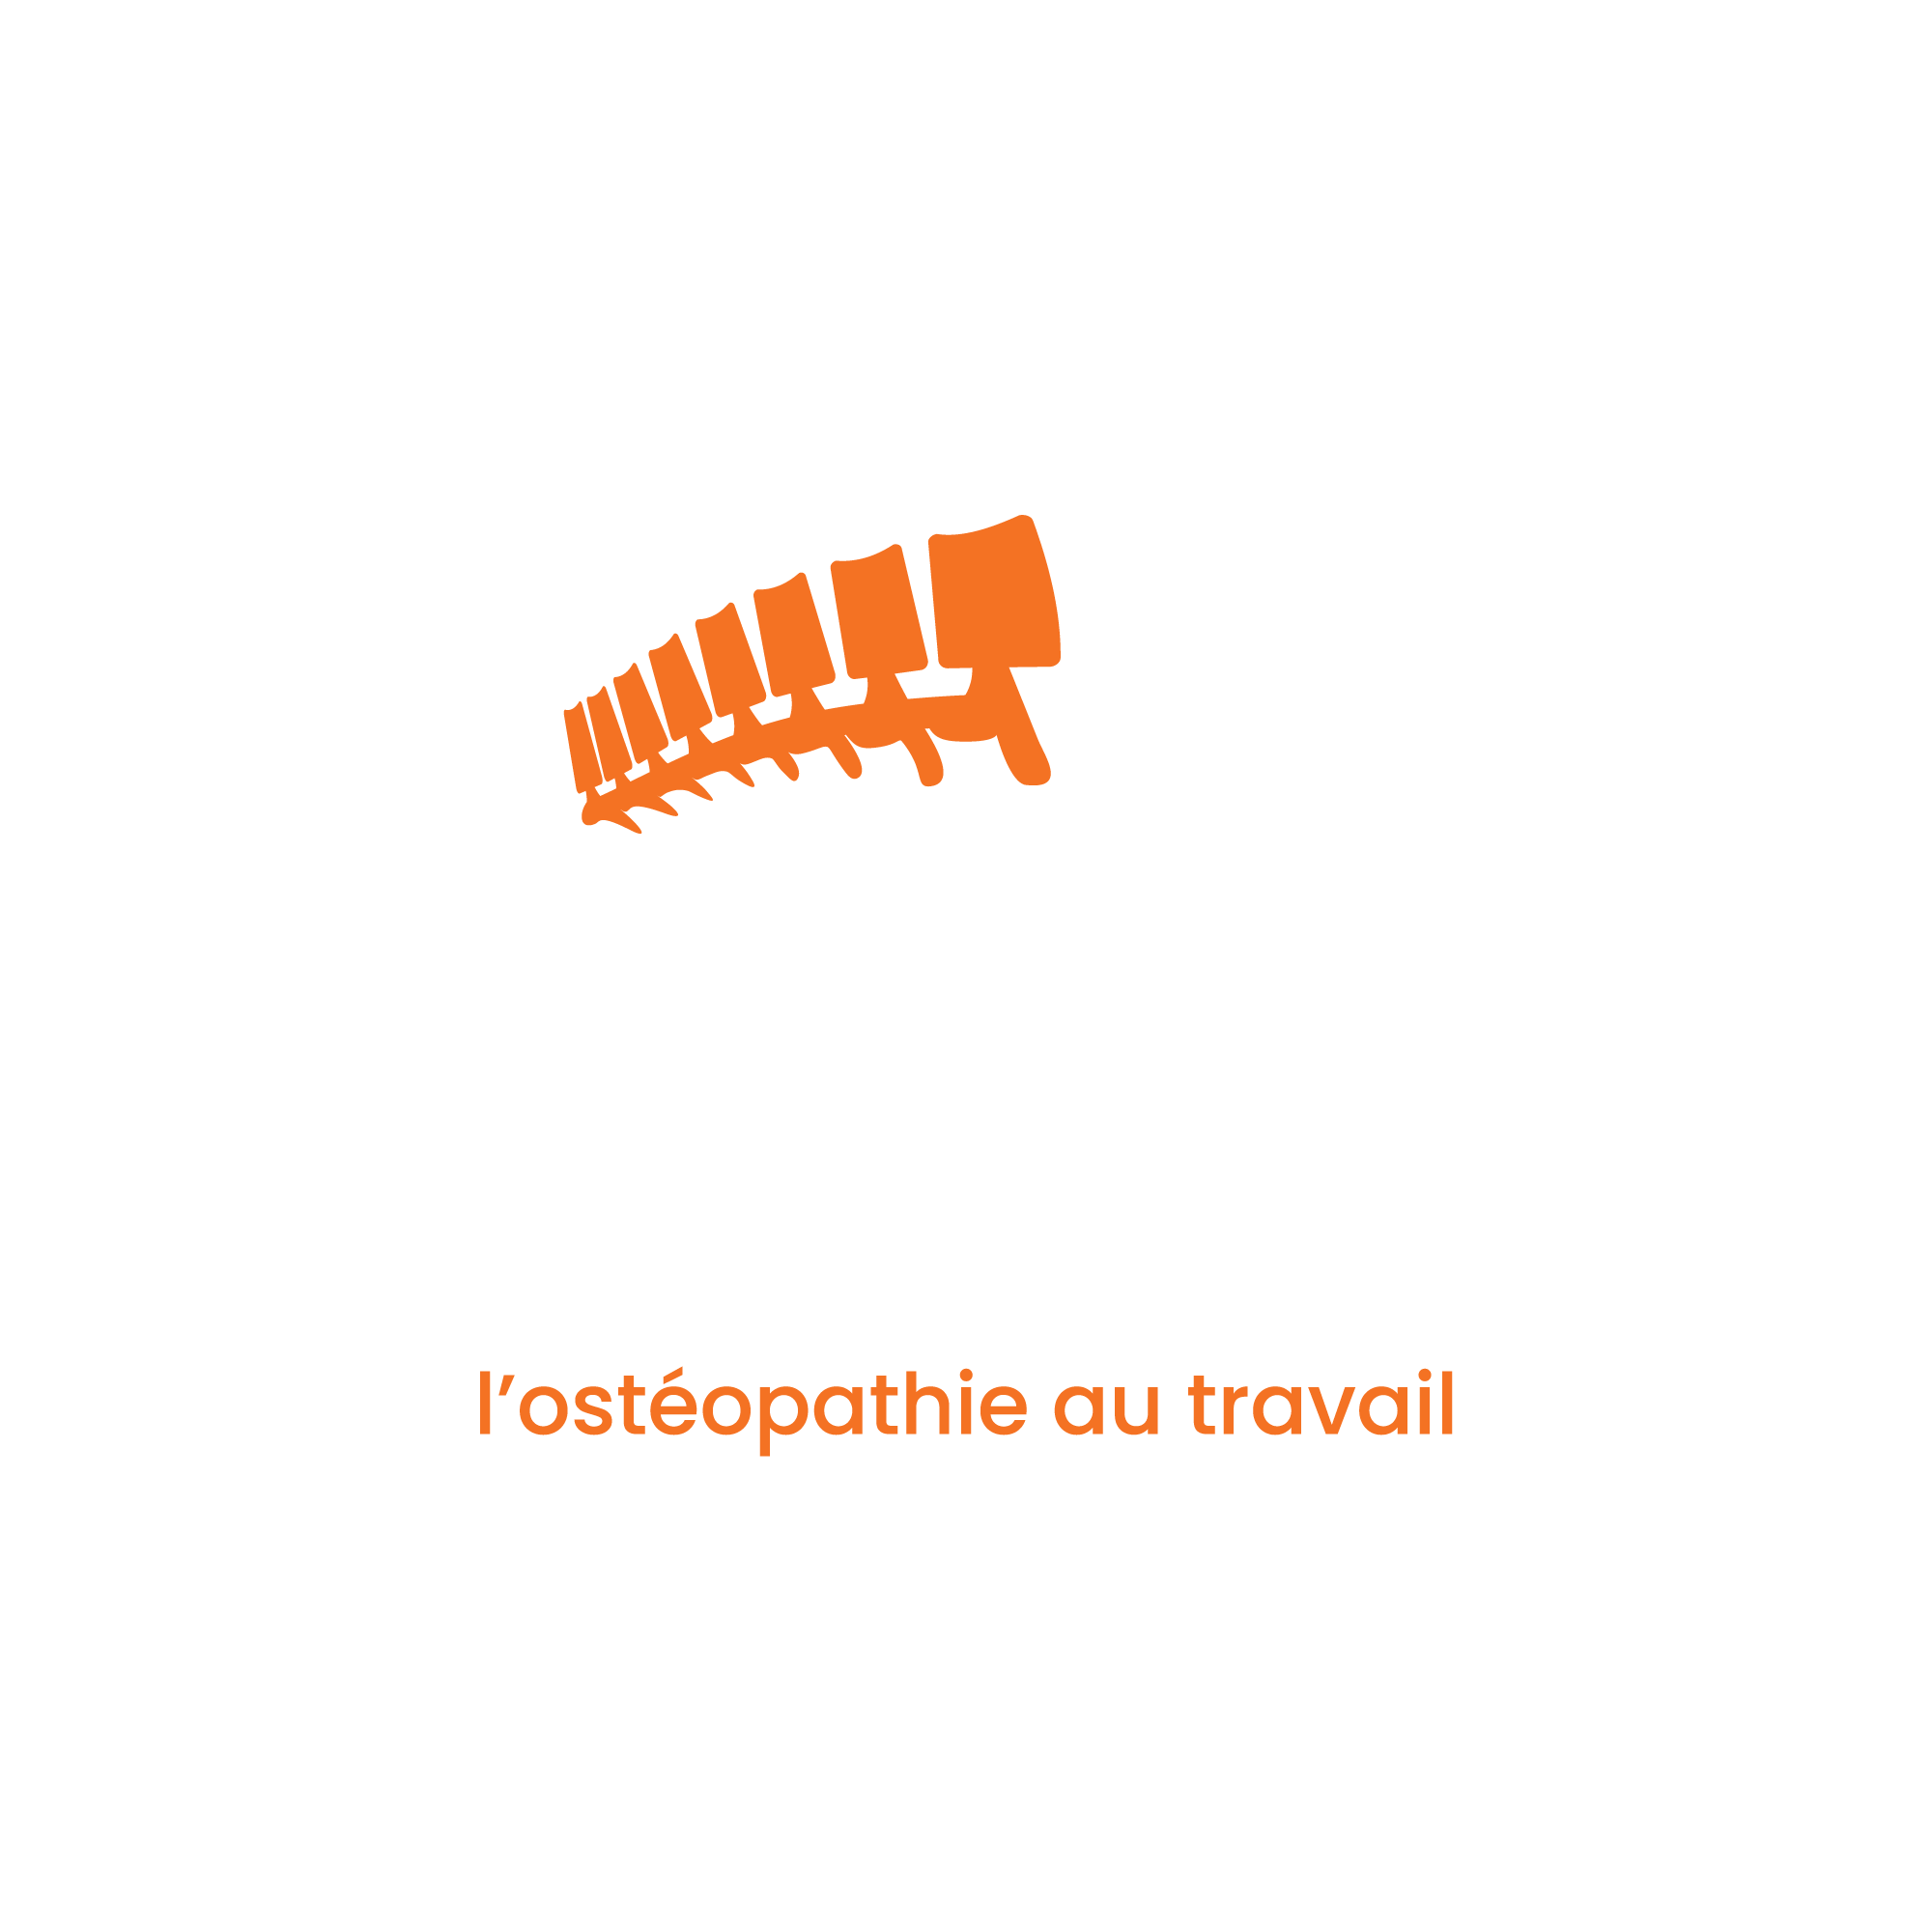 Osteocar Website